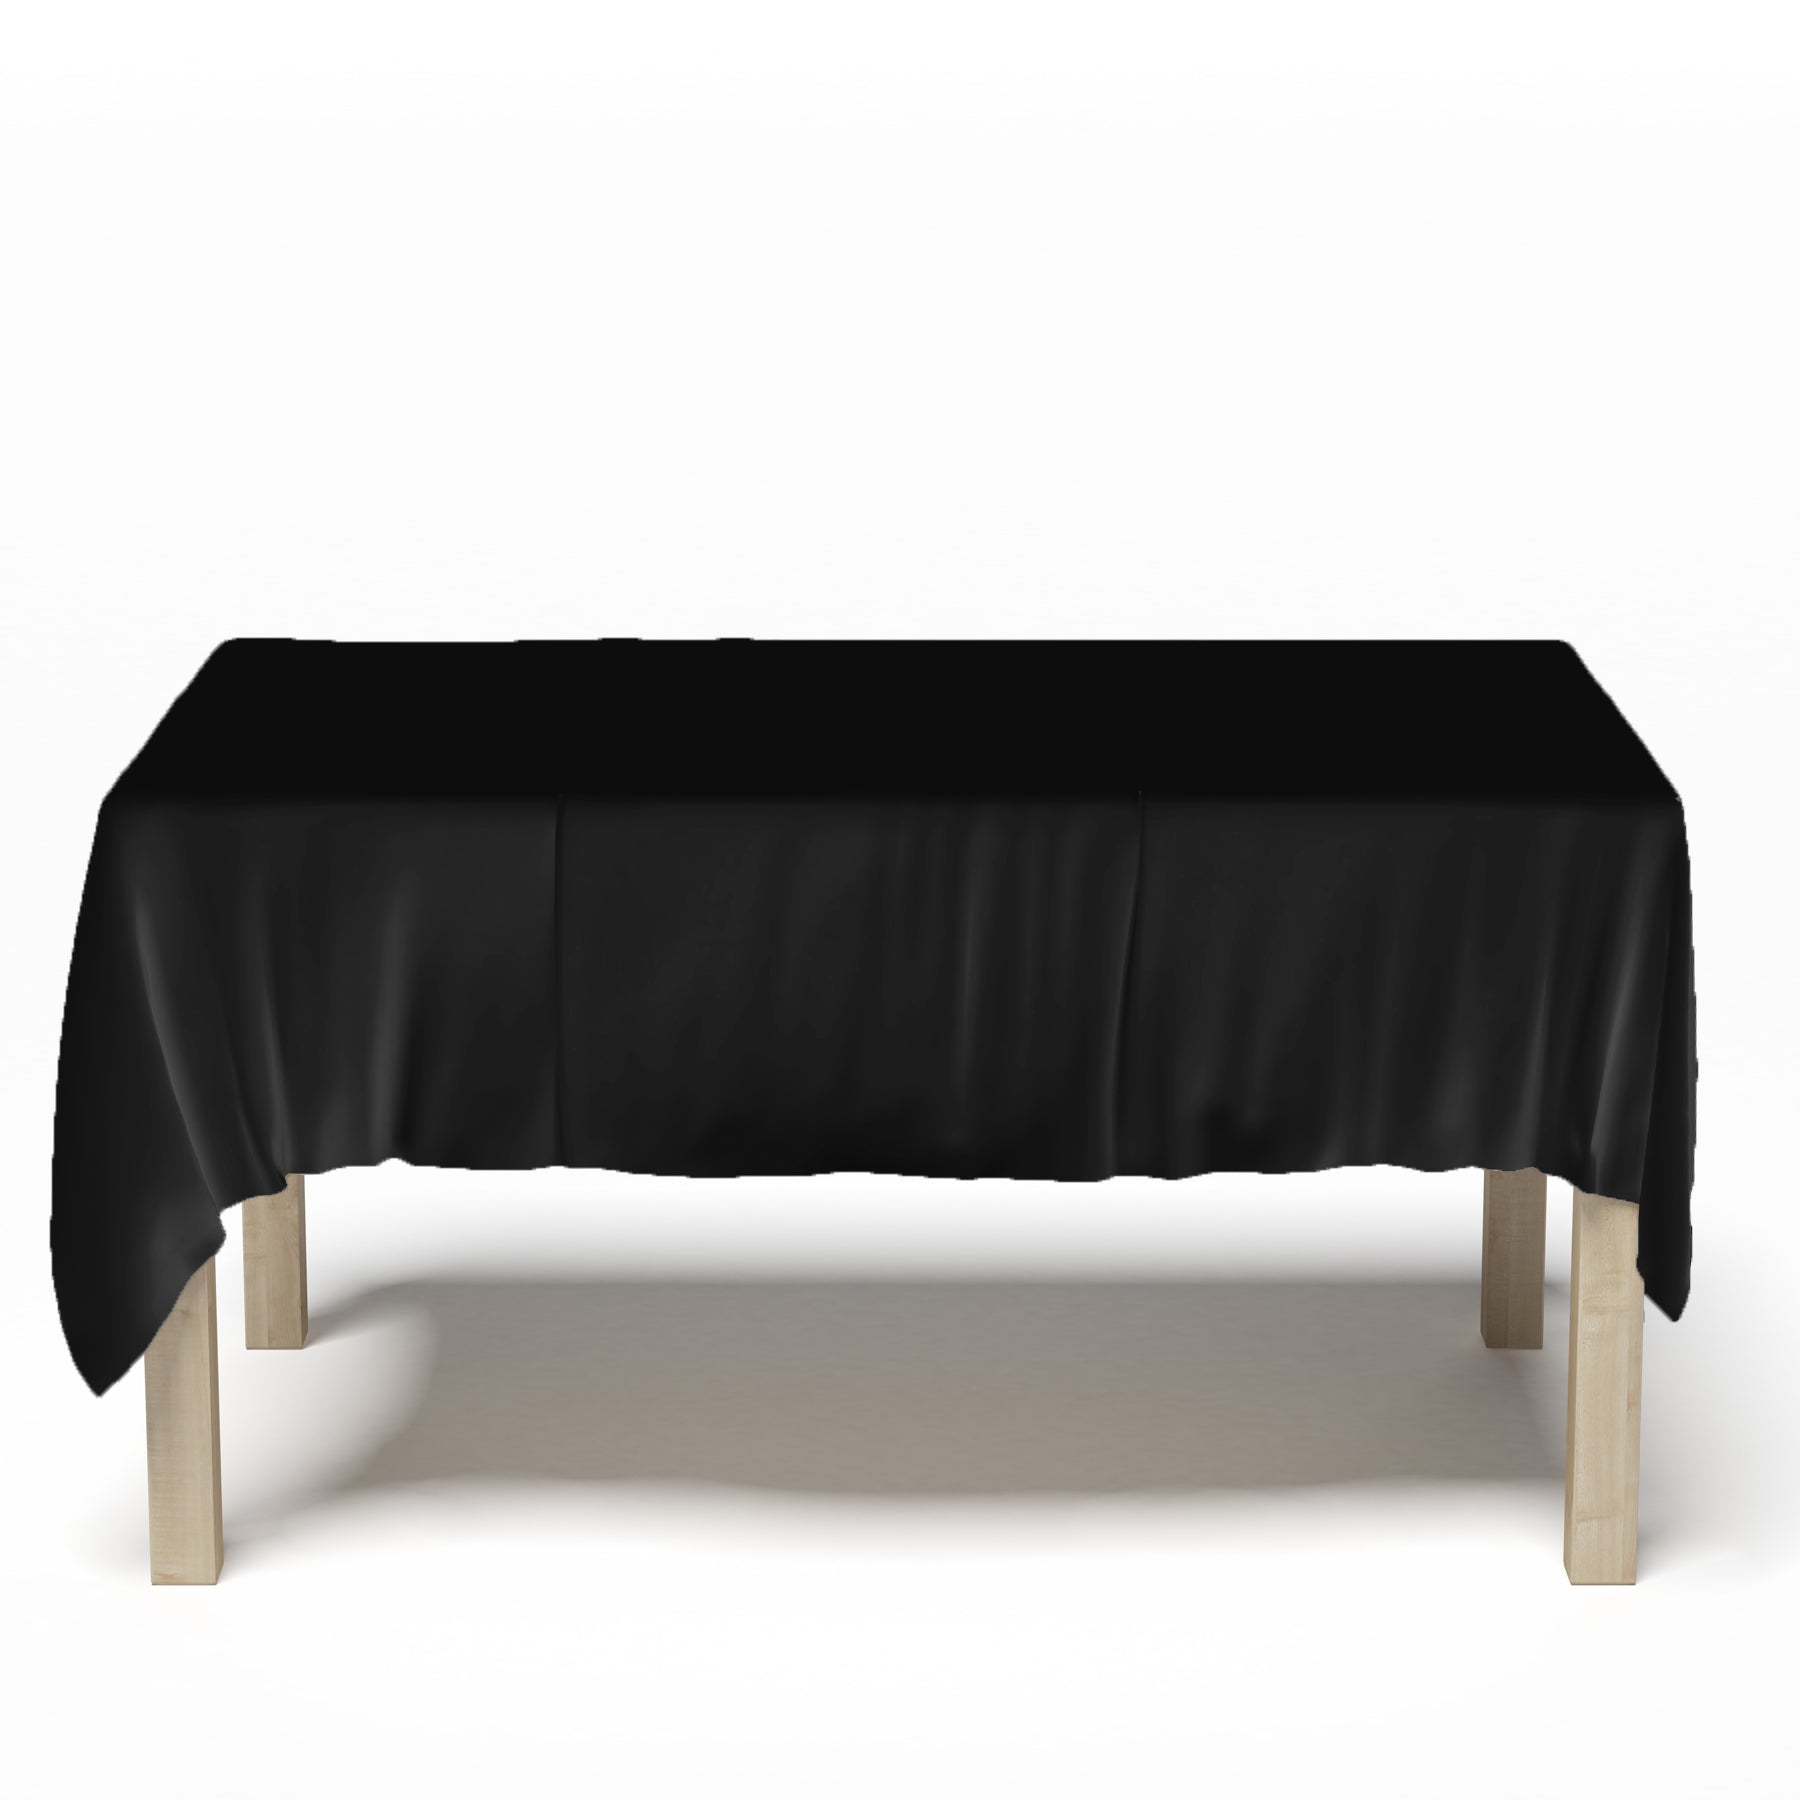 Black 144x70 Brocade Tablecloth for Hire